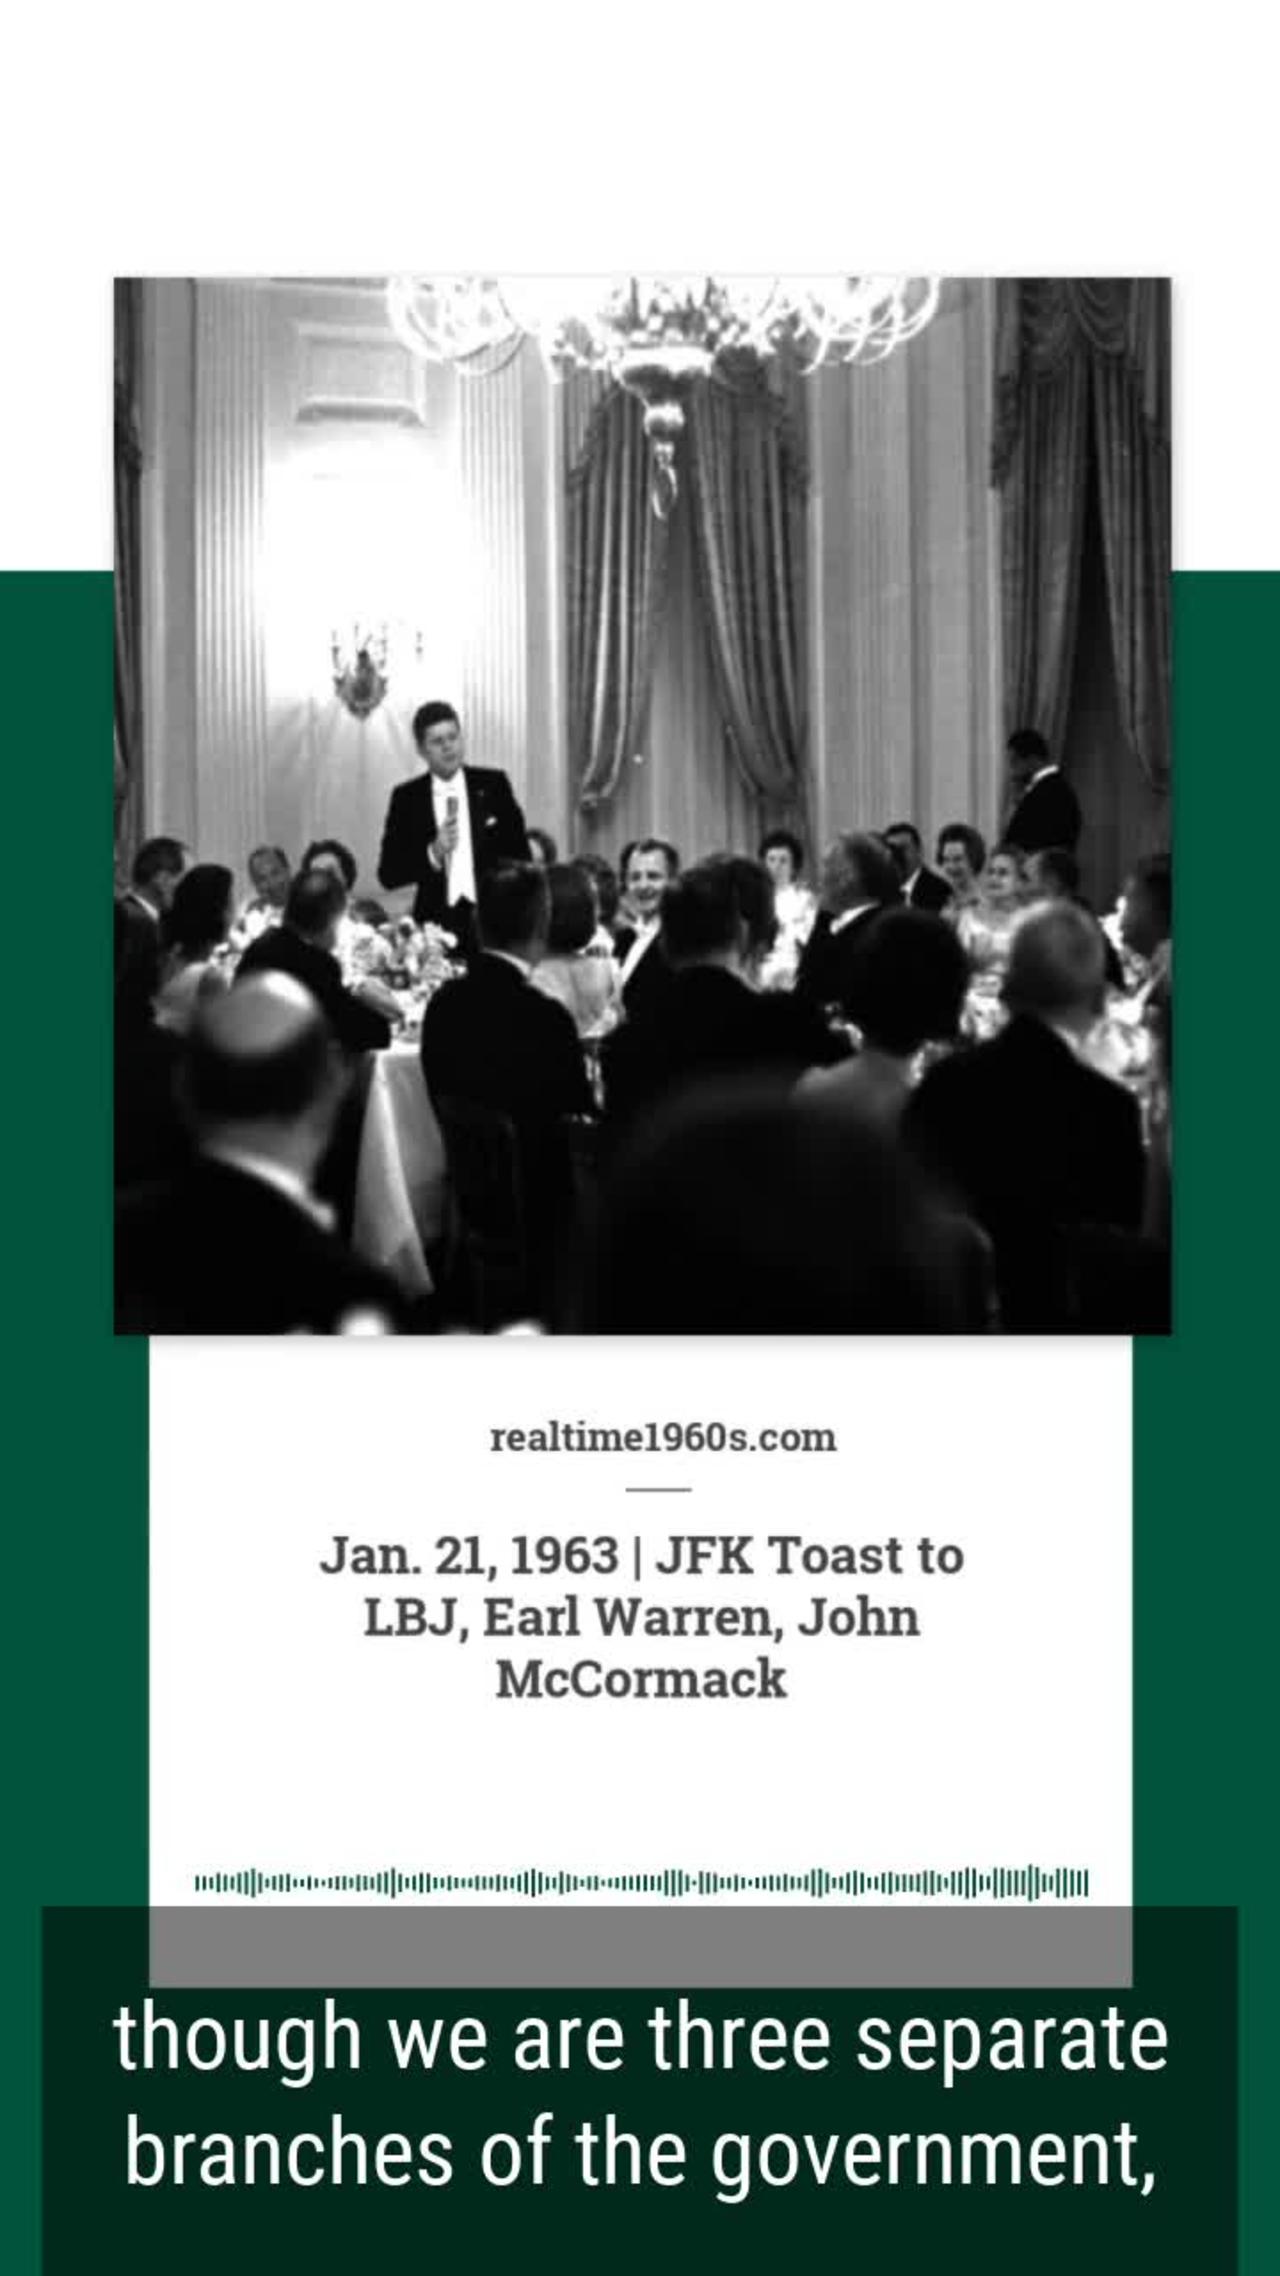 Jan. 21, 1963 - JFK Toast to LBJ, Speaker McCormack  and Chief Justice Earl Warren